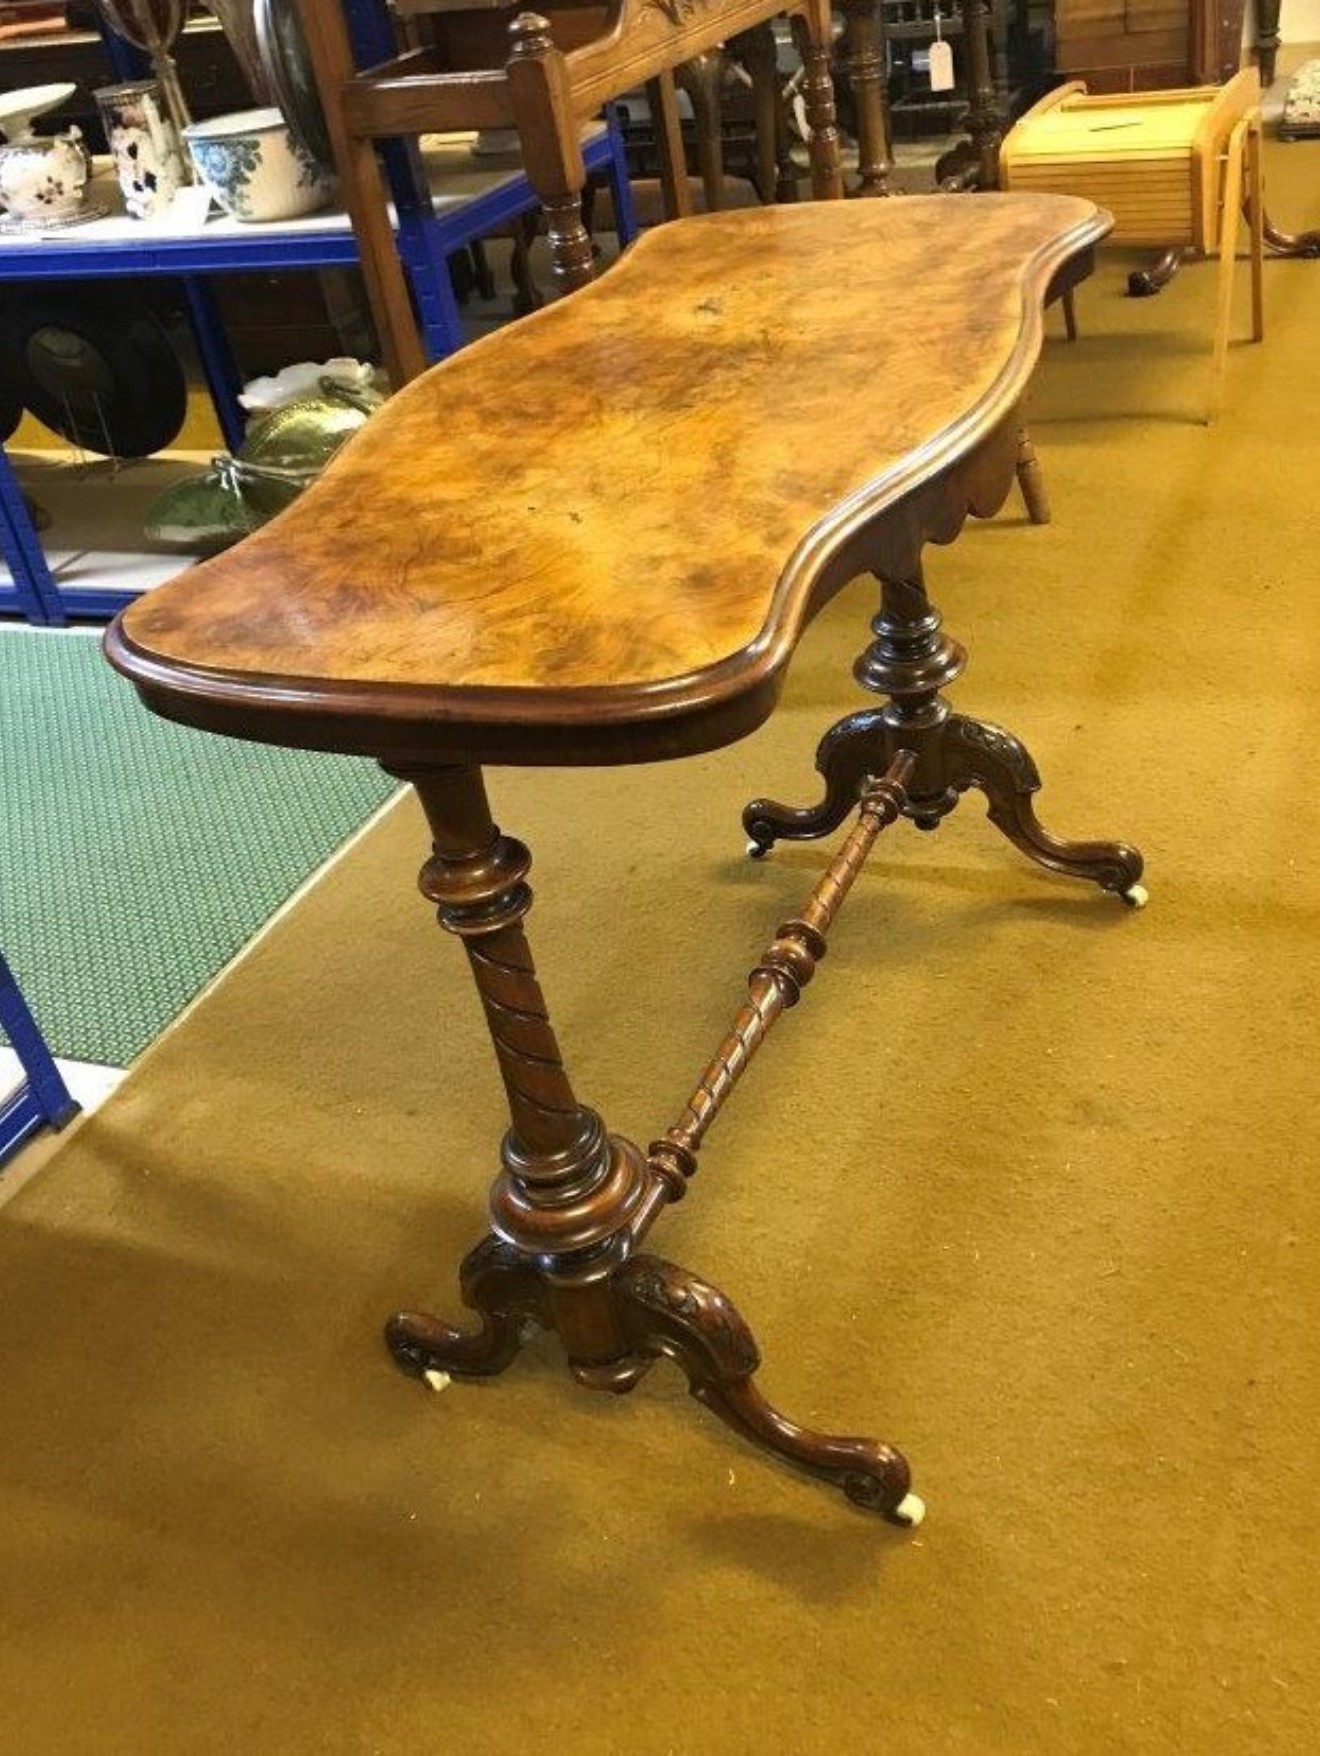 Victorian Burr Walnut Side Table